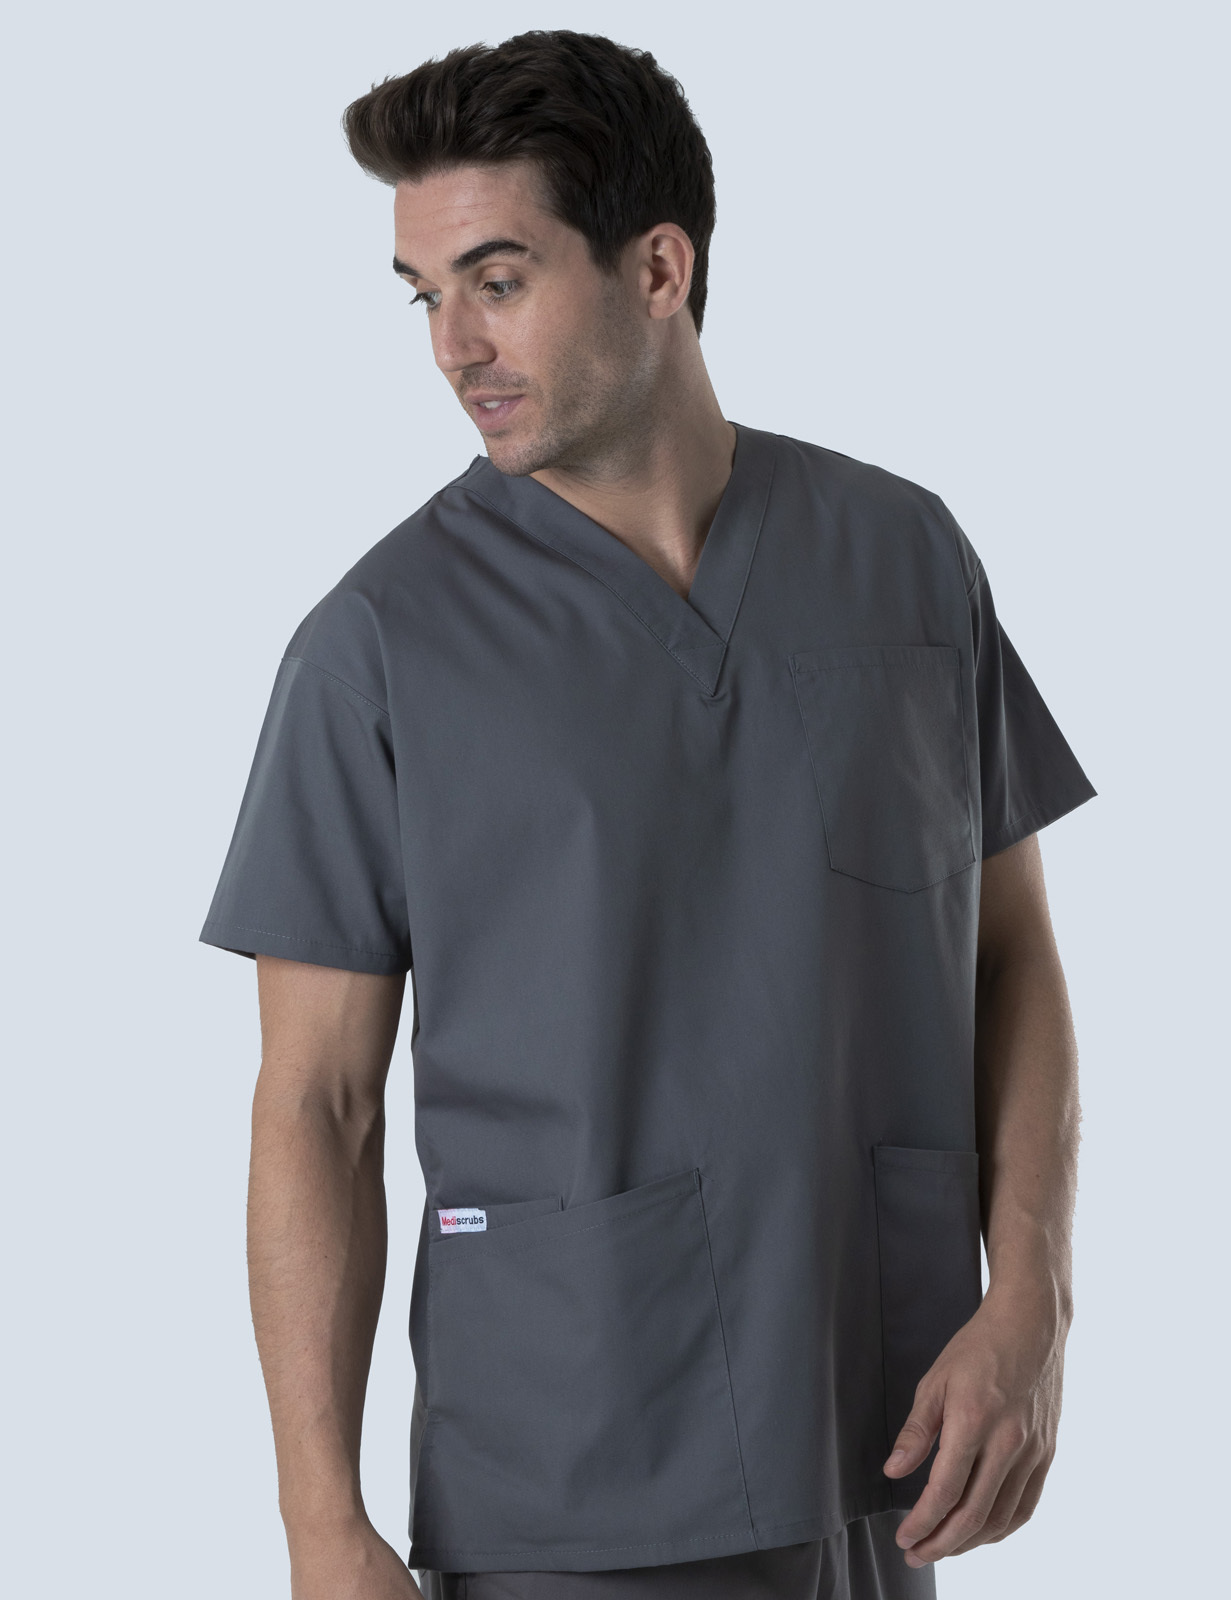 PAH - ED Doctor (4 Pocket Scrub Top and Cargo Pants in Steel Grey)